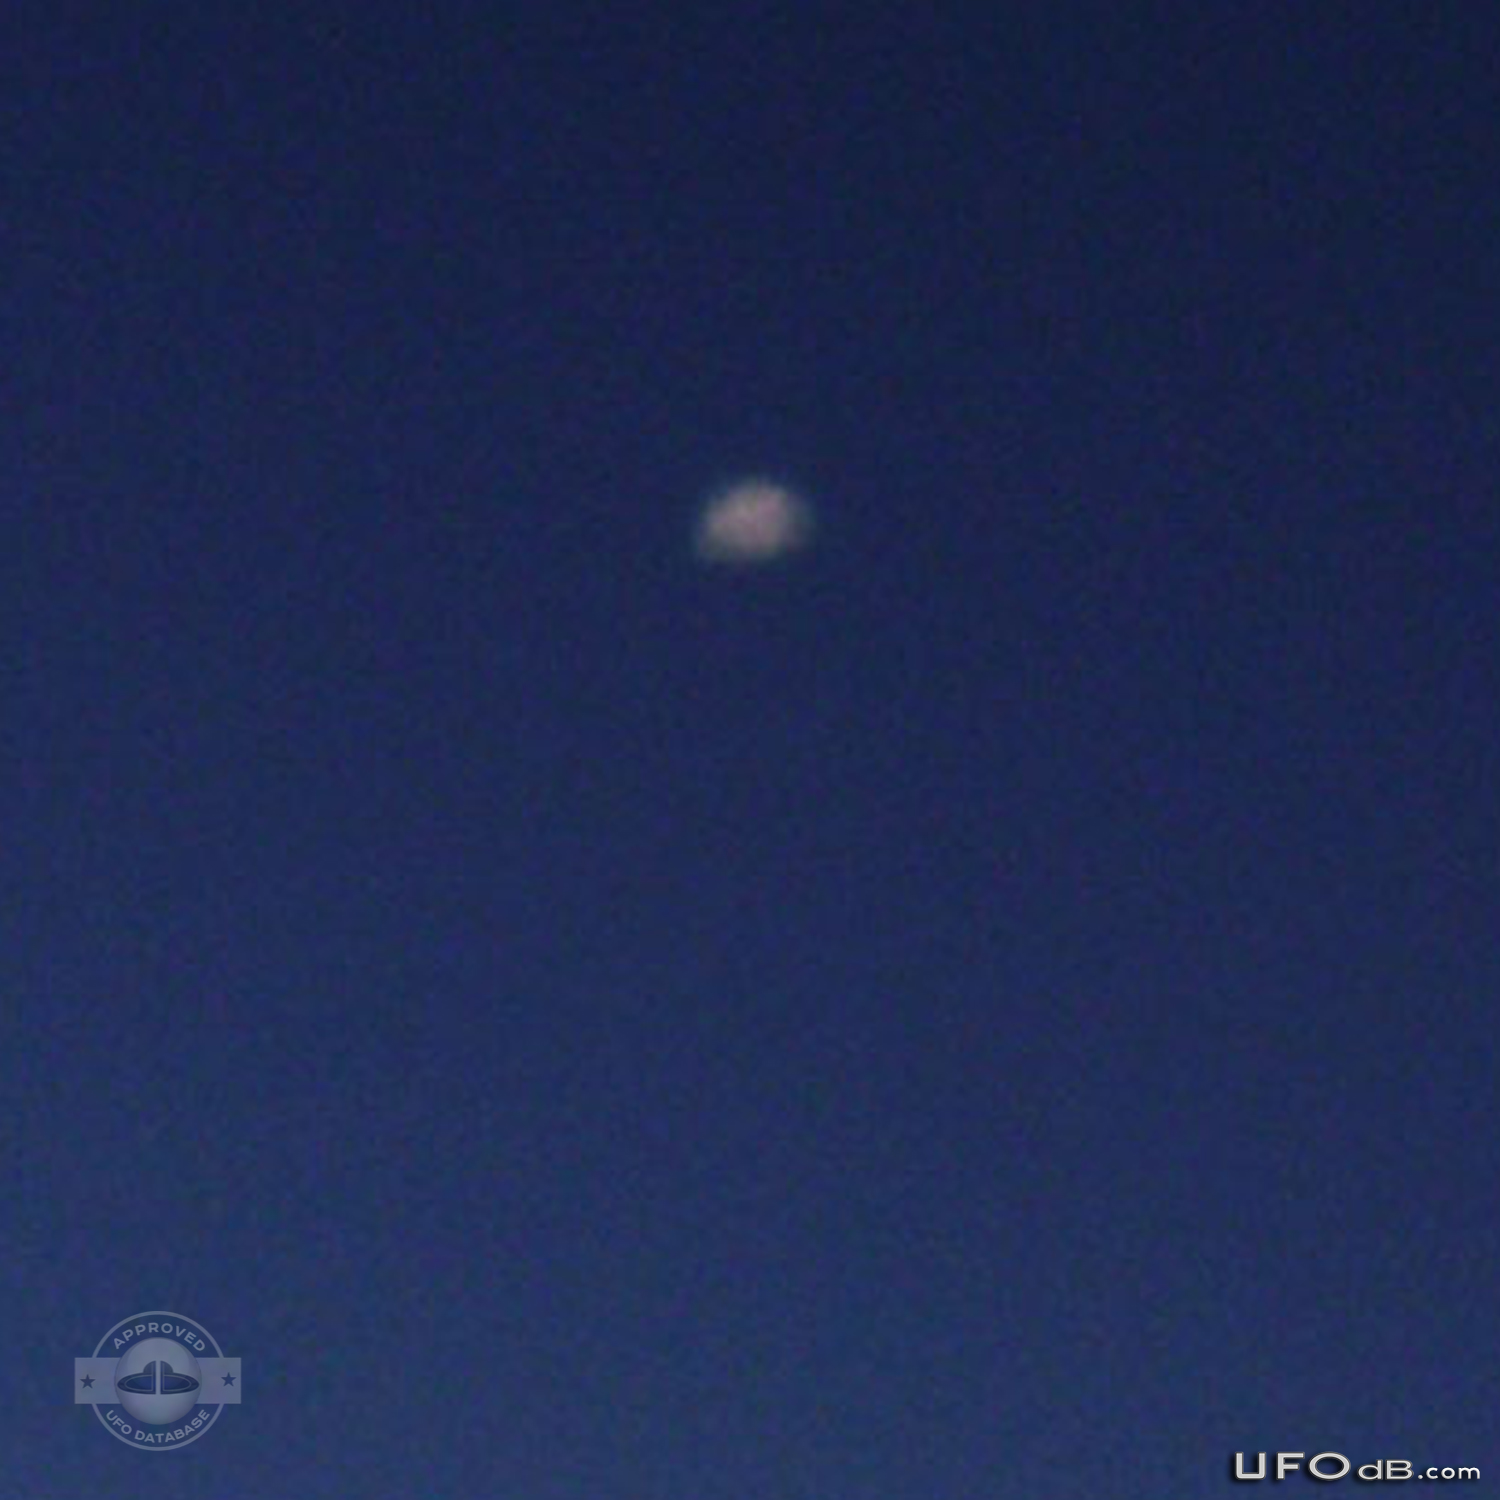 At dawn over Windsor - Bright UFO near the Detroit River | Canada 2011 UFO Picture #261-3